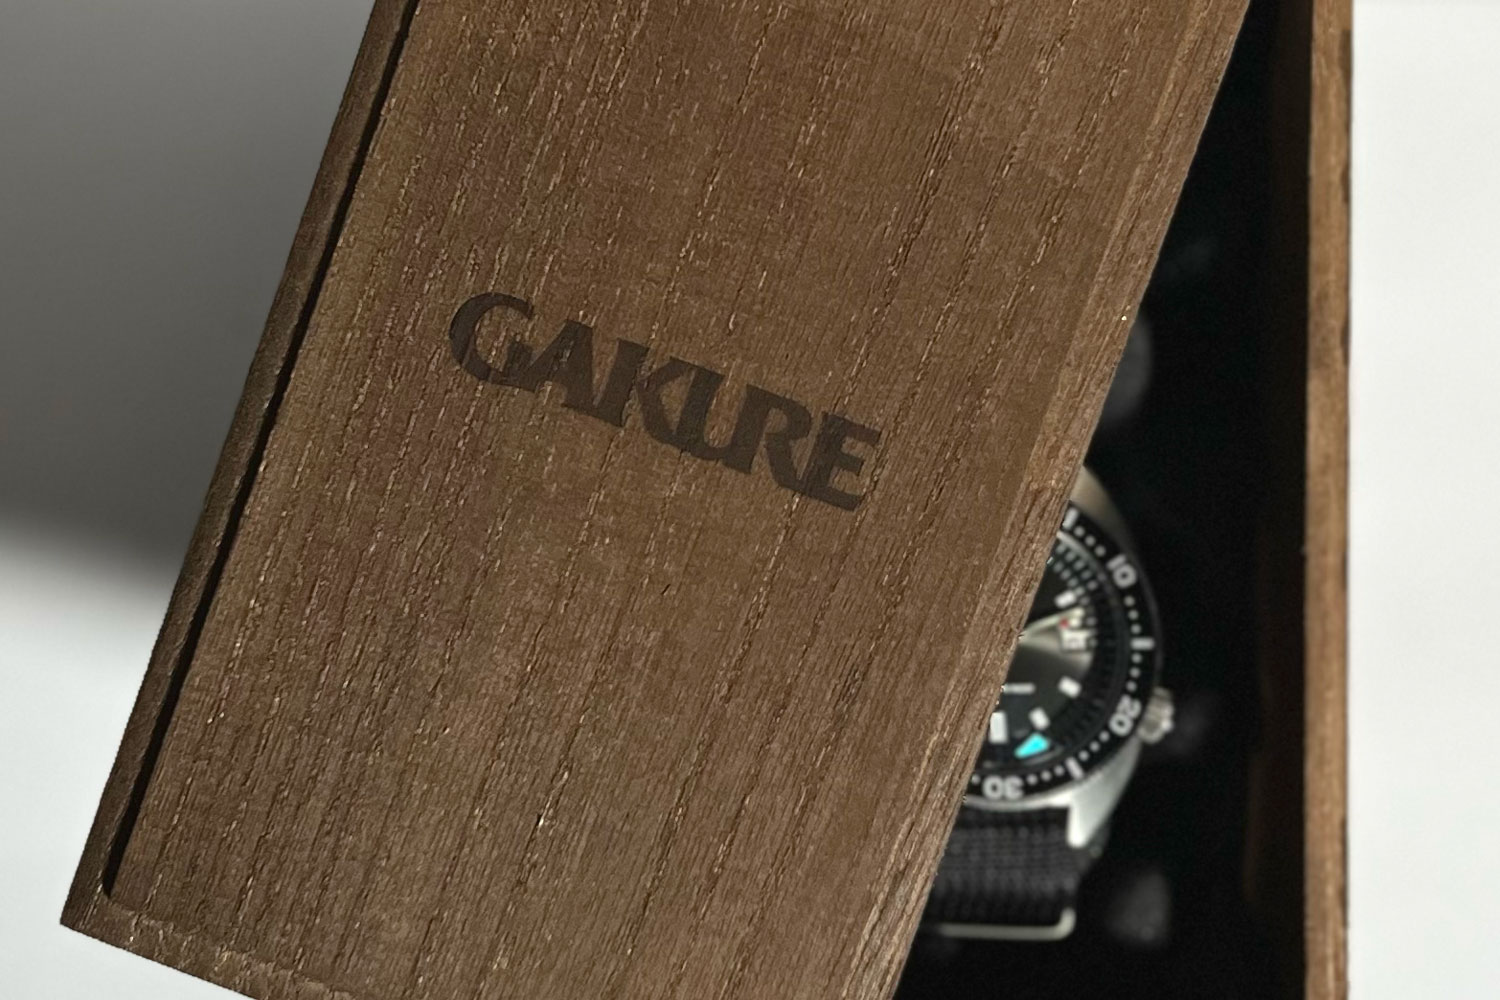 GAKURE ガクレ カスタムダイバーズウォッチ custom divers watch